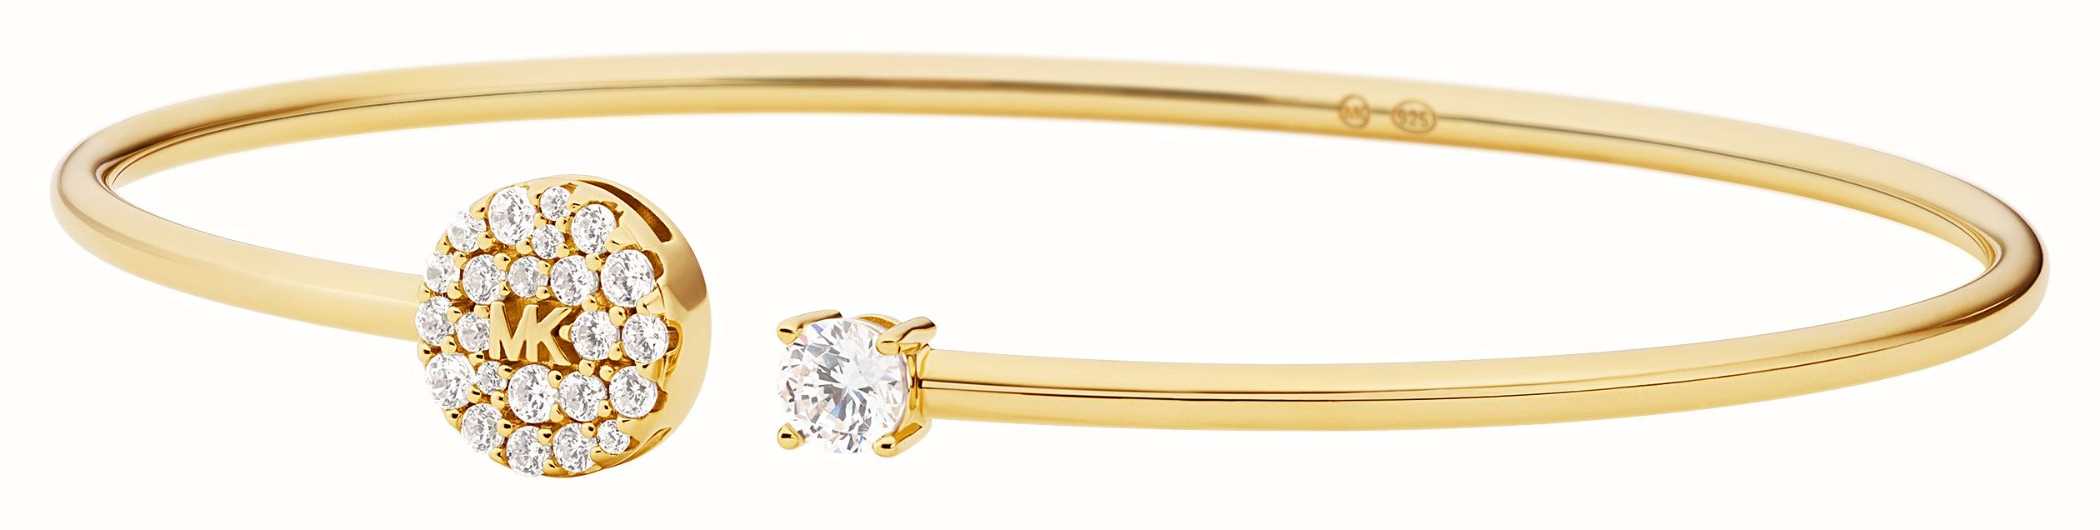 Michael Kors Fashion Brass Bracelet and Earring Set